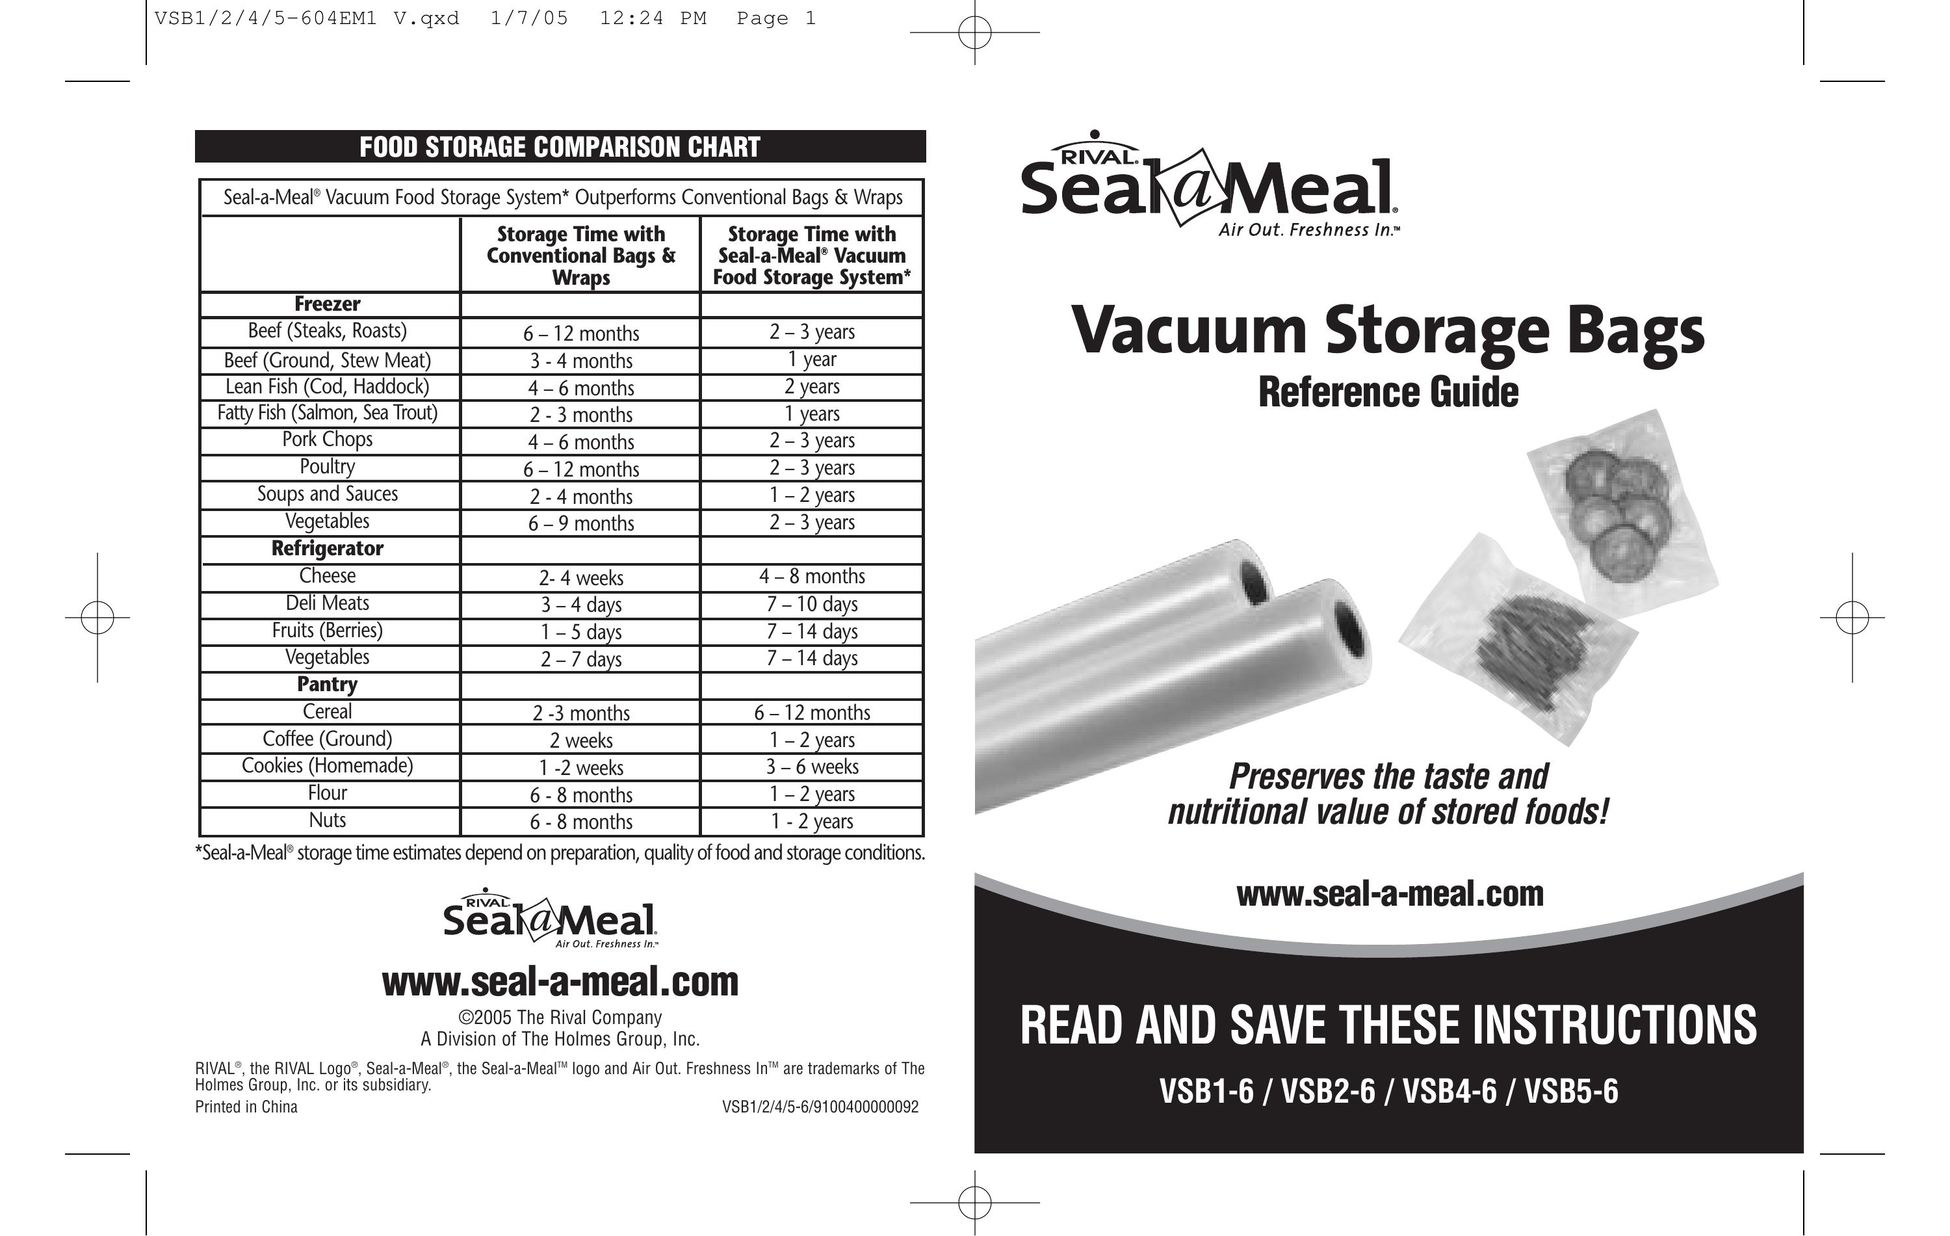 Seal-a-Meal VSB1-6 Food Saver User Manual